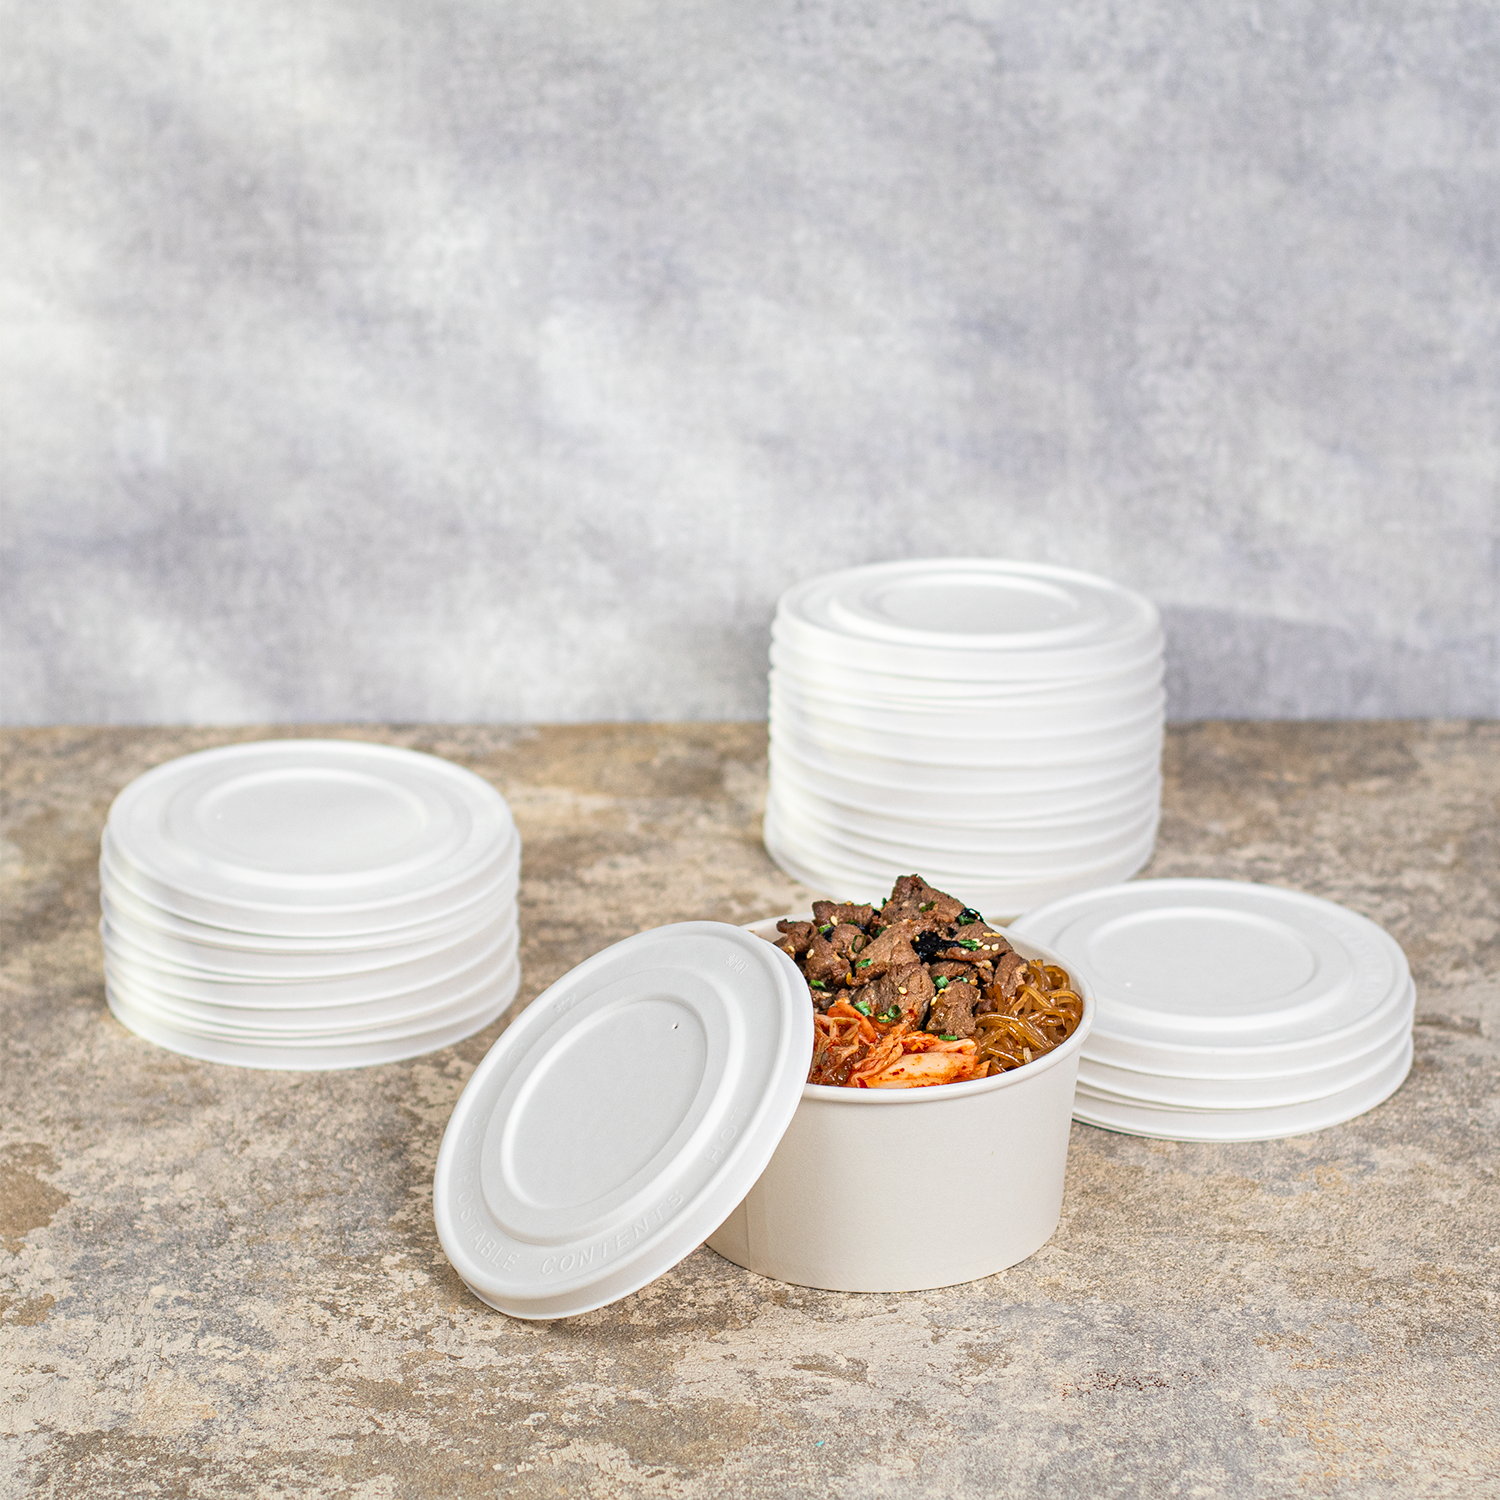 Karat Earth 142mm Compostable Fiber Paper Flat lid for 24-32 oz Paper Food Container - 600 pcs